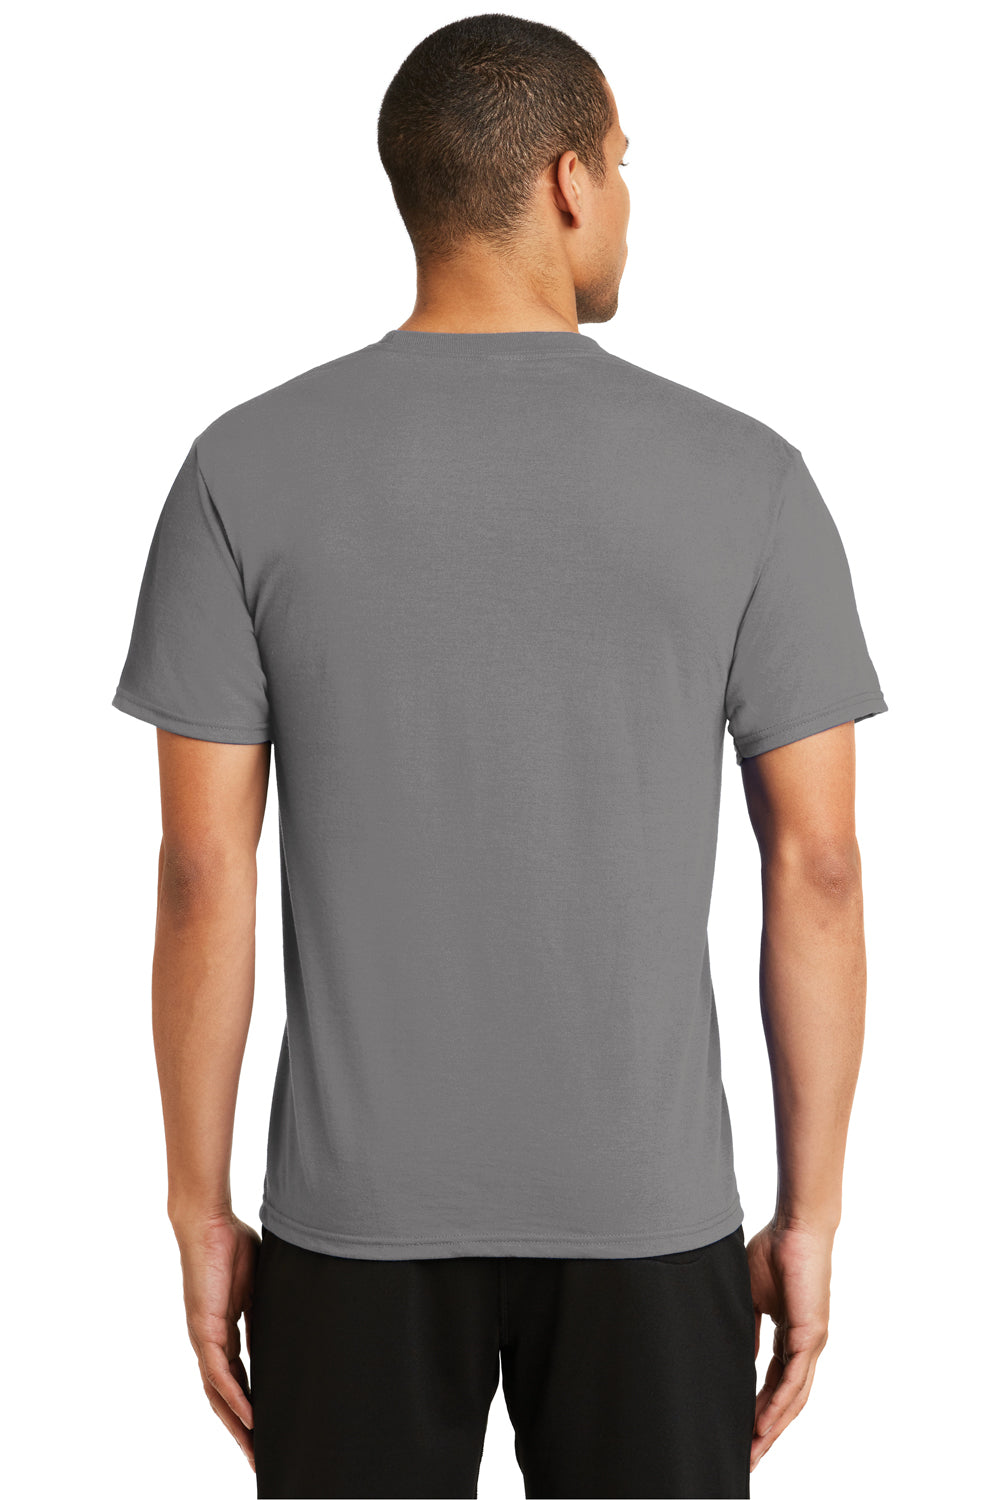 Port & Company PC381 Mens Dry Zone Performance Moisture Wicking Short Sleeve Crewneck T-Shirt Medium Grey Back